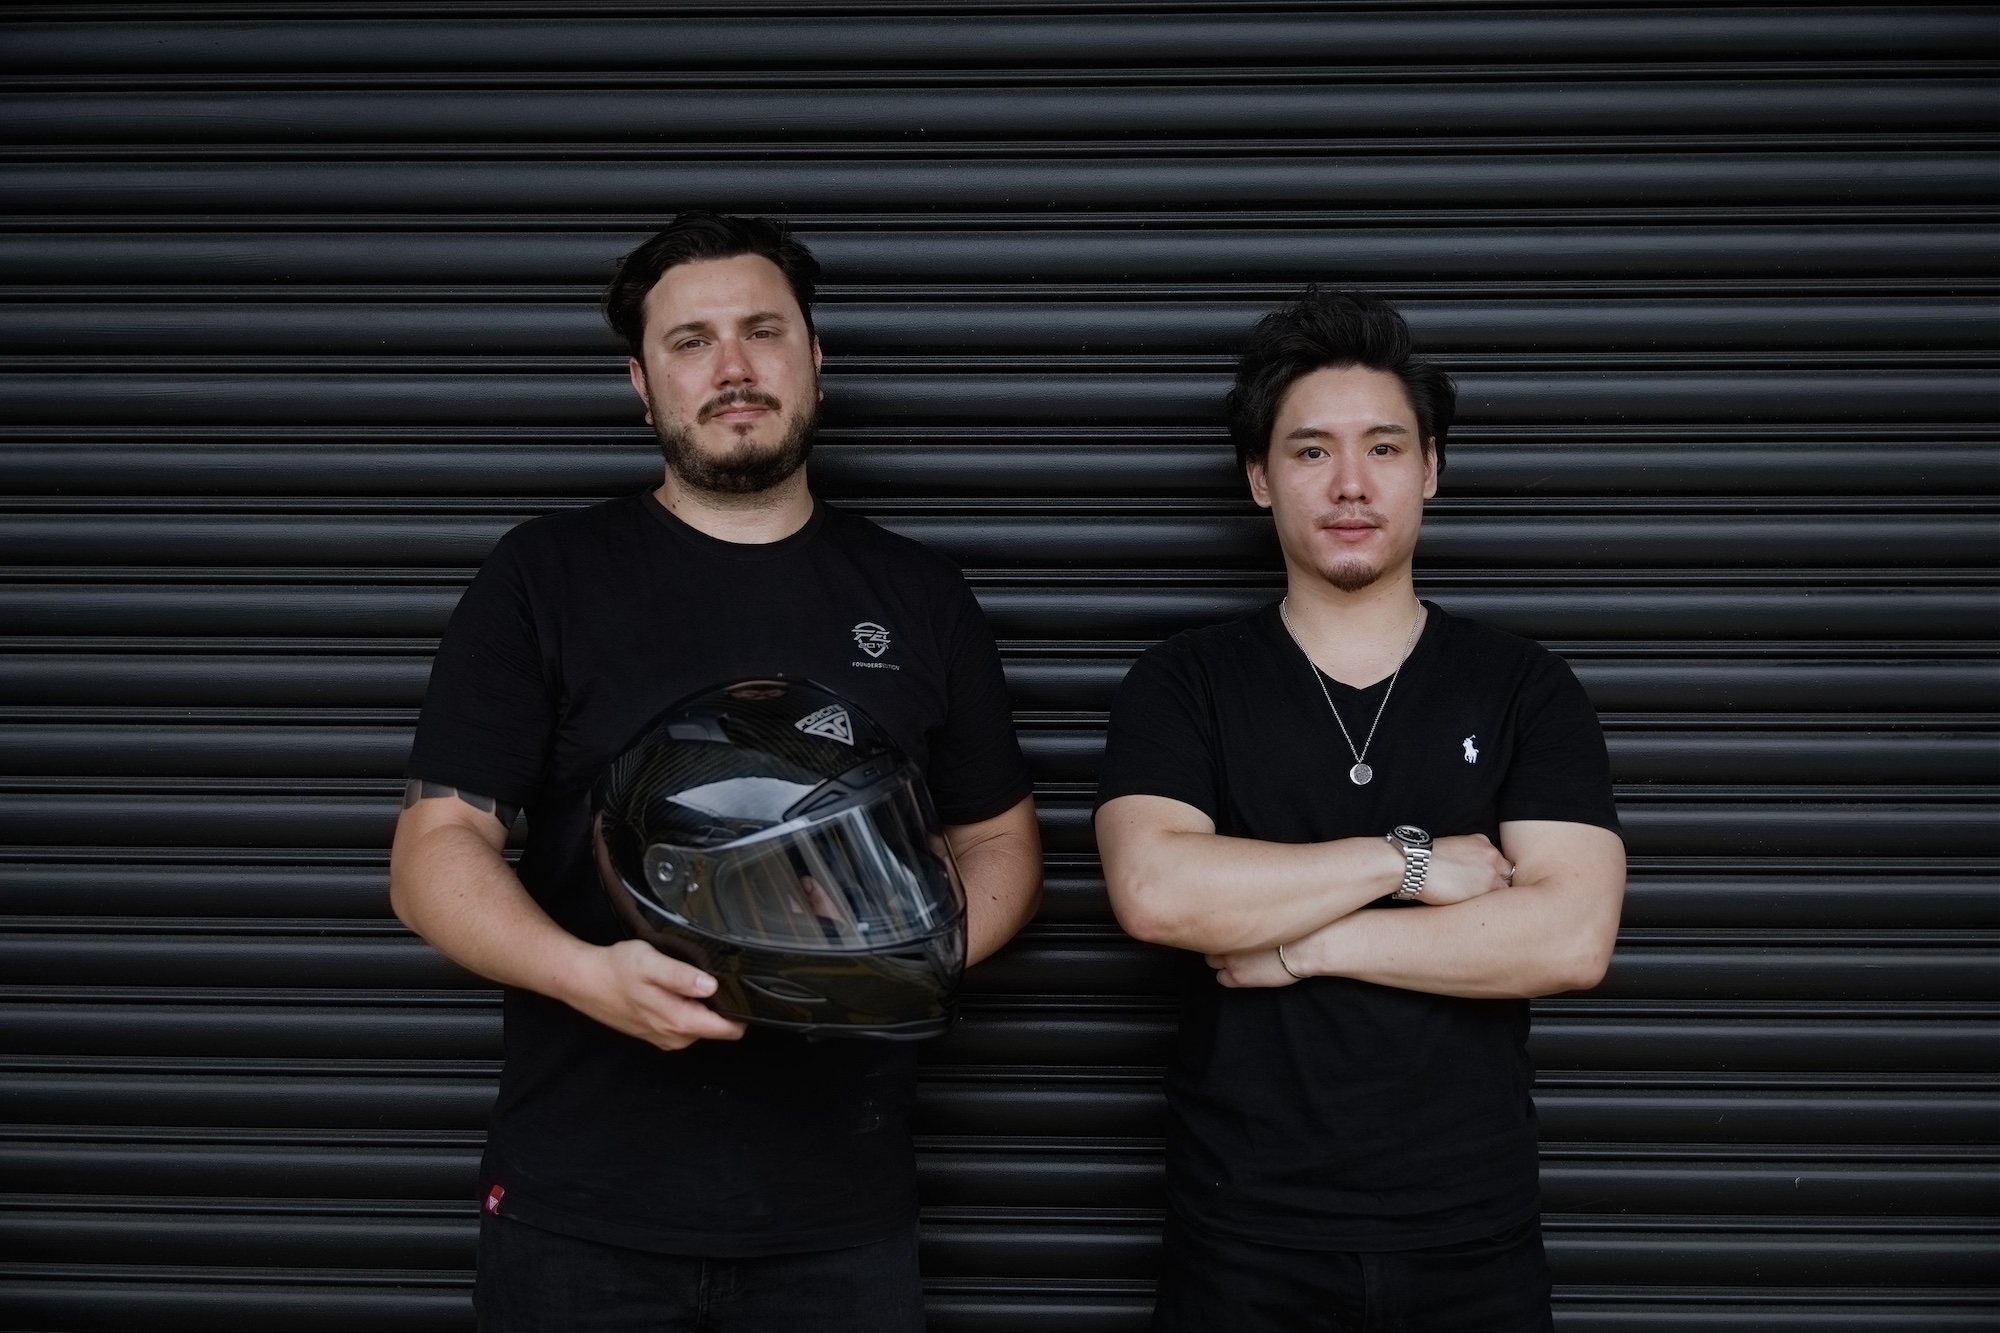 Forcite smart helmet co-founders 